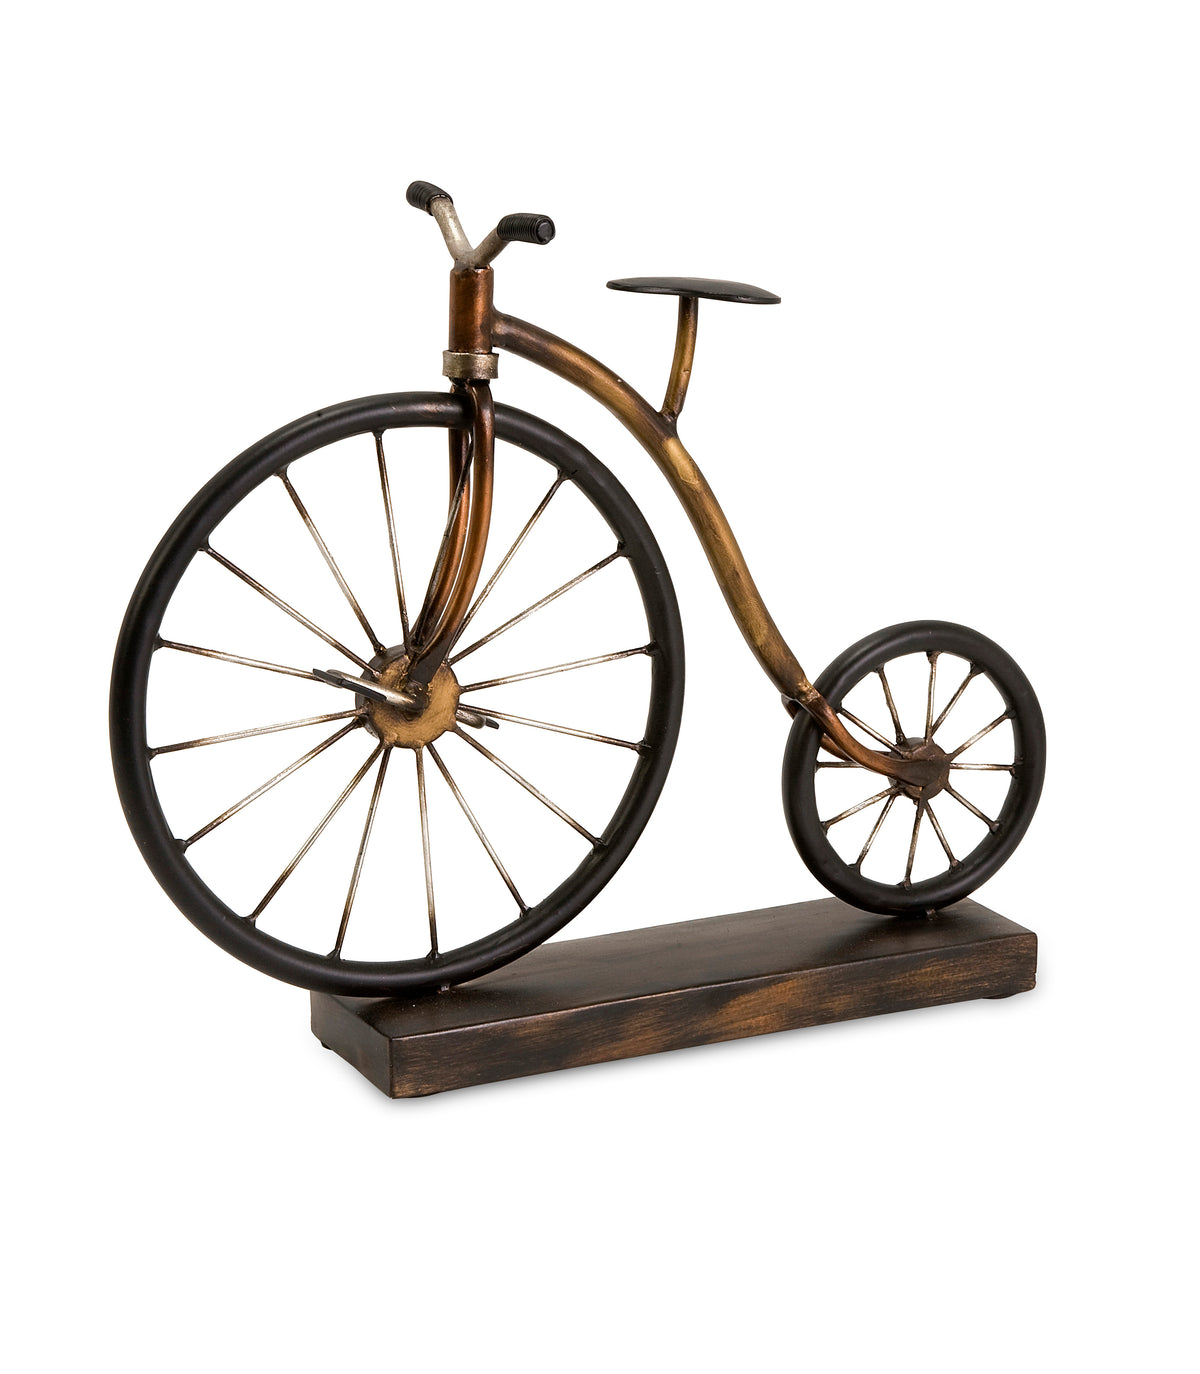 Escultura Bicicleta